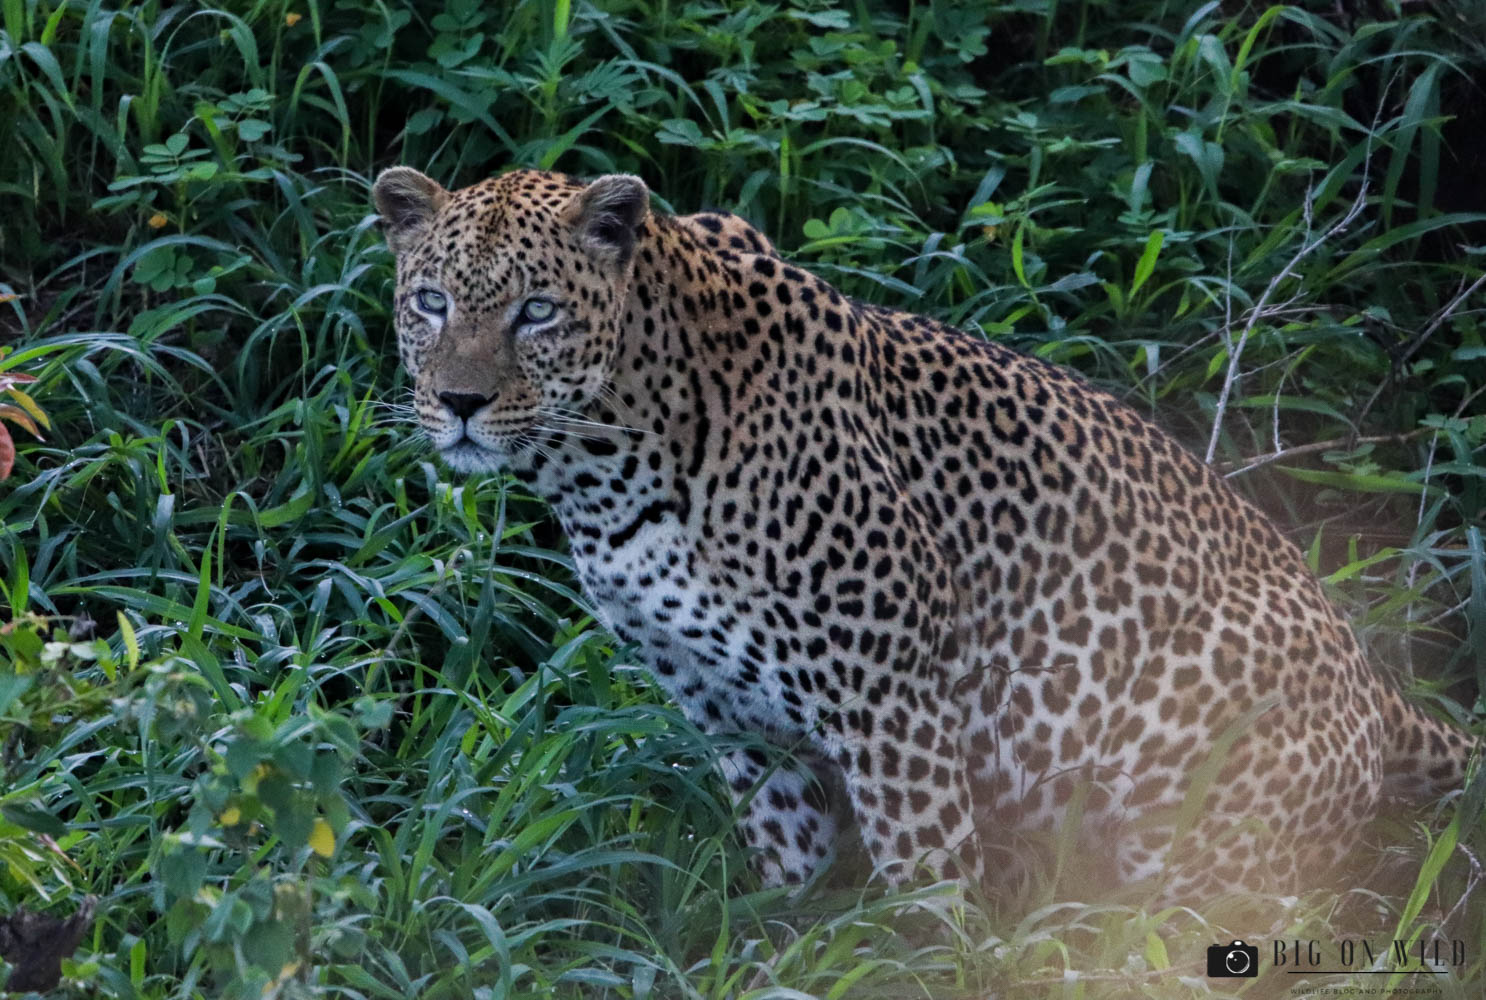 The Best Season to Visit the Kruger National Park